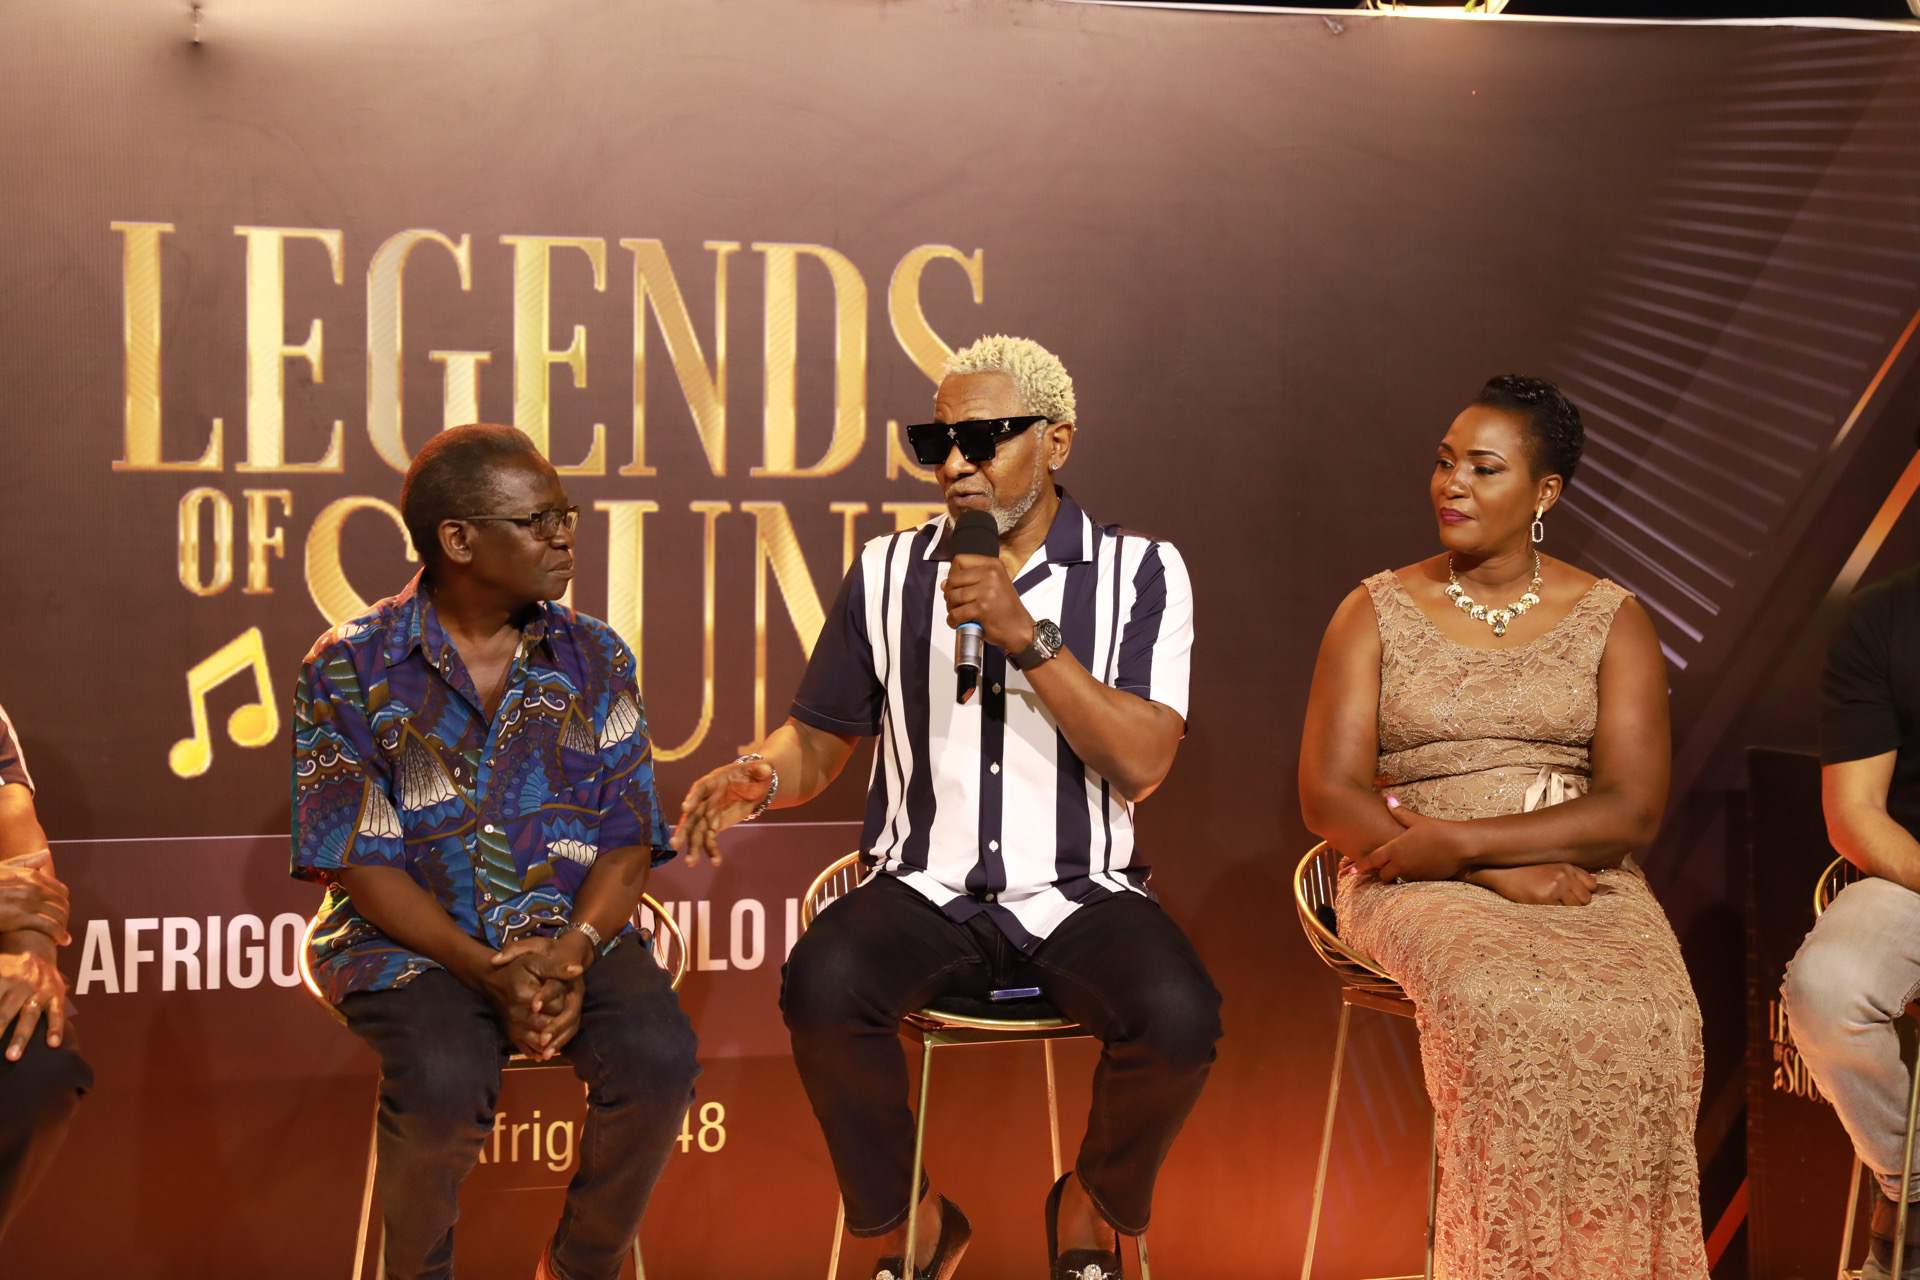 Talent Africa Unveils Legends of Sound: Afrigo at 48 Featuring Awilo Longomba